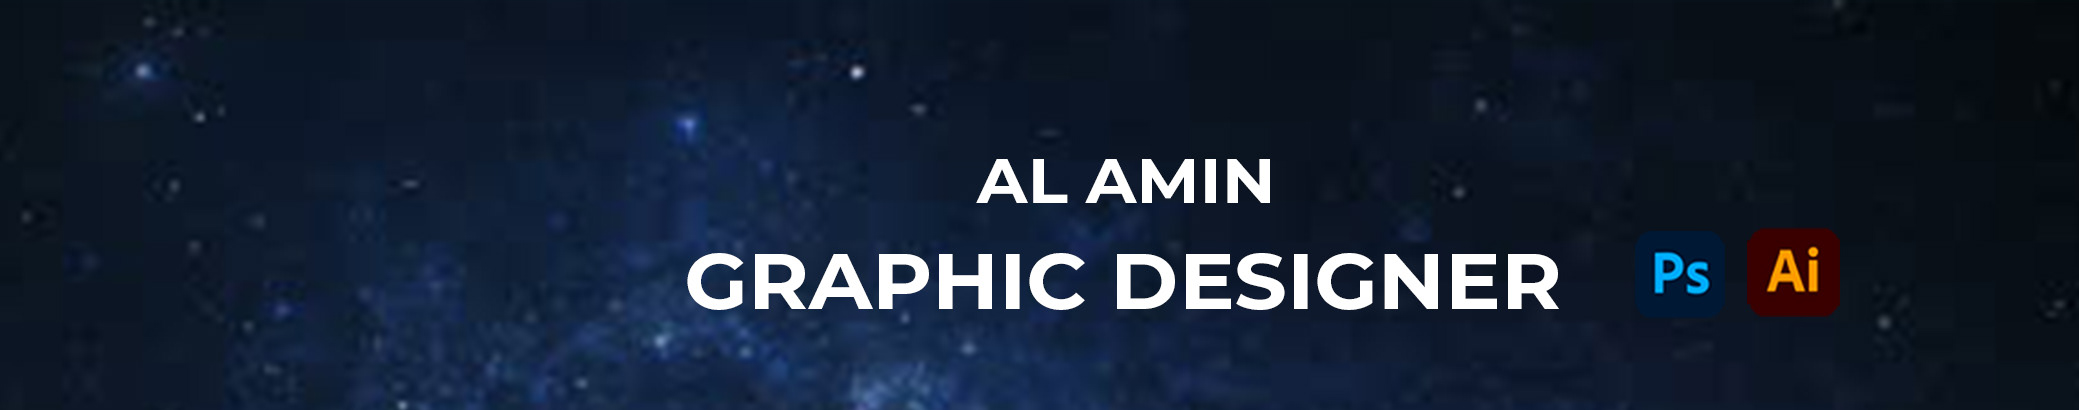 Profielbanner van Al Amin